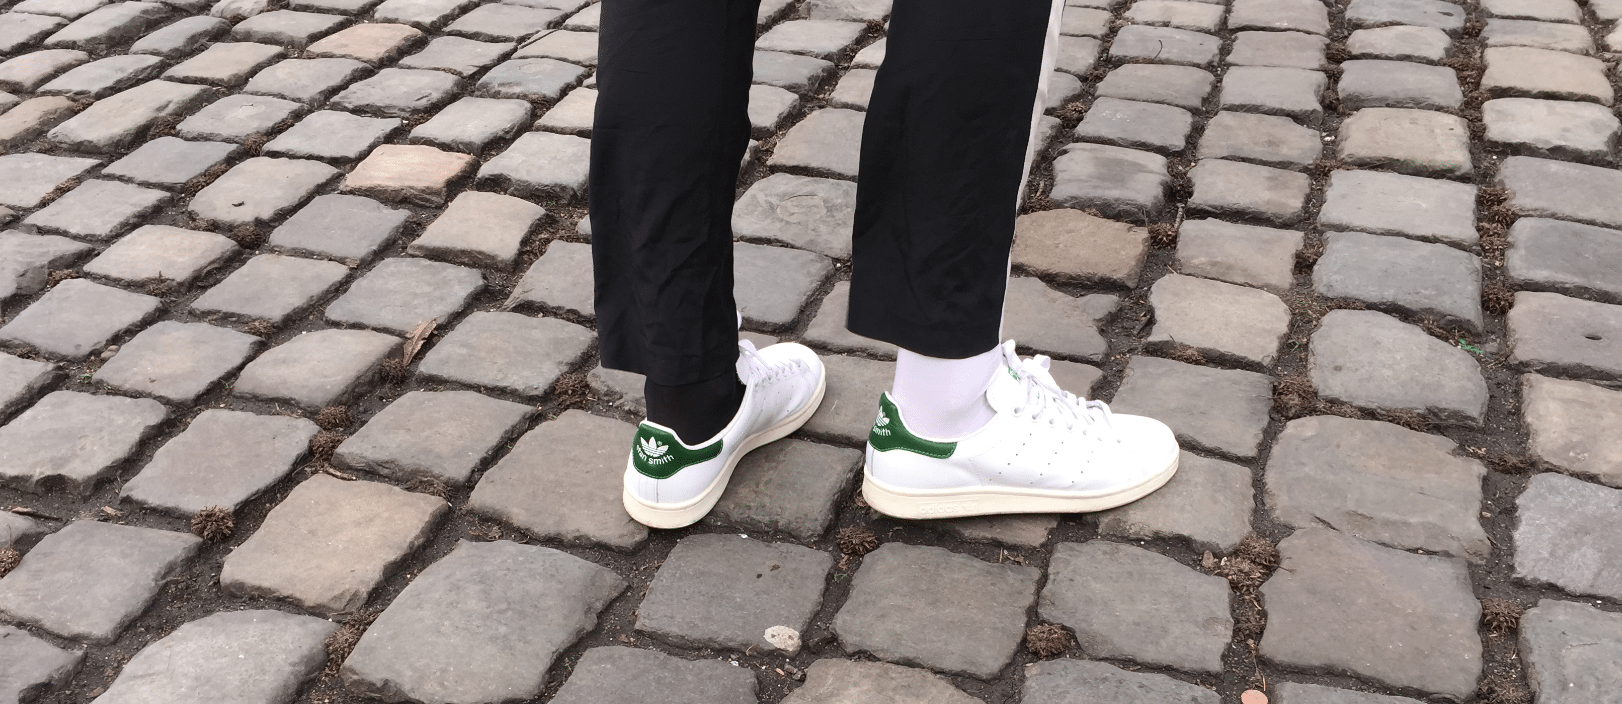 Welke sokken in je witte sneakers - LovestoHAVE